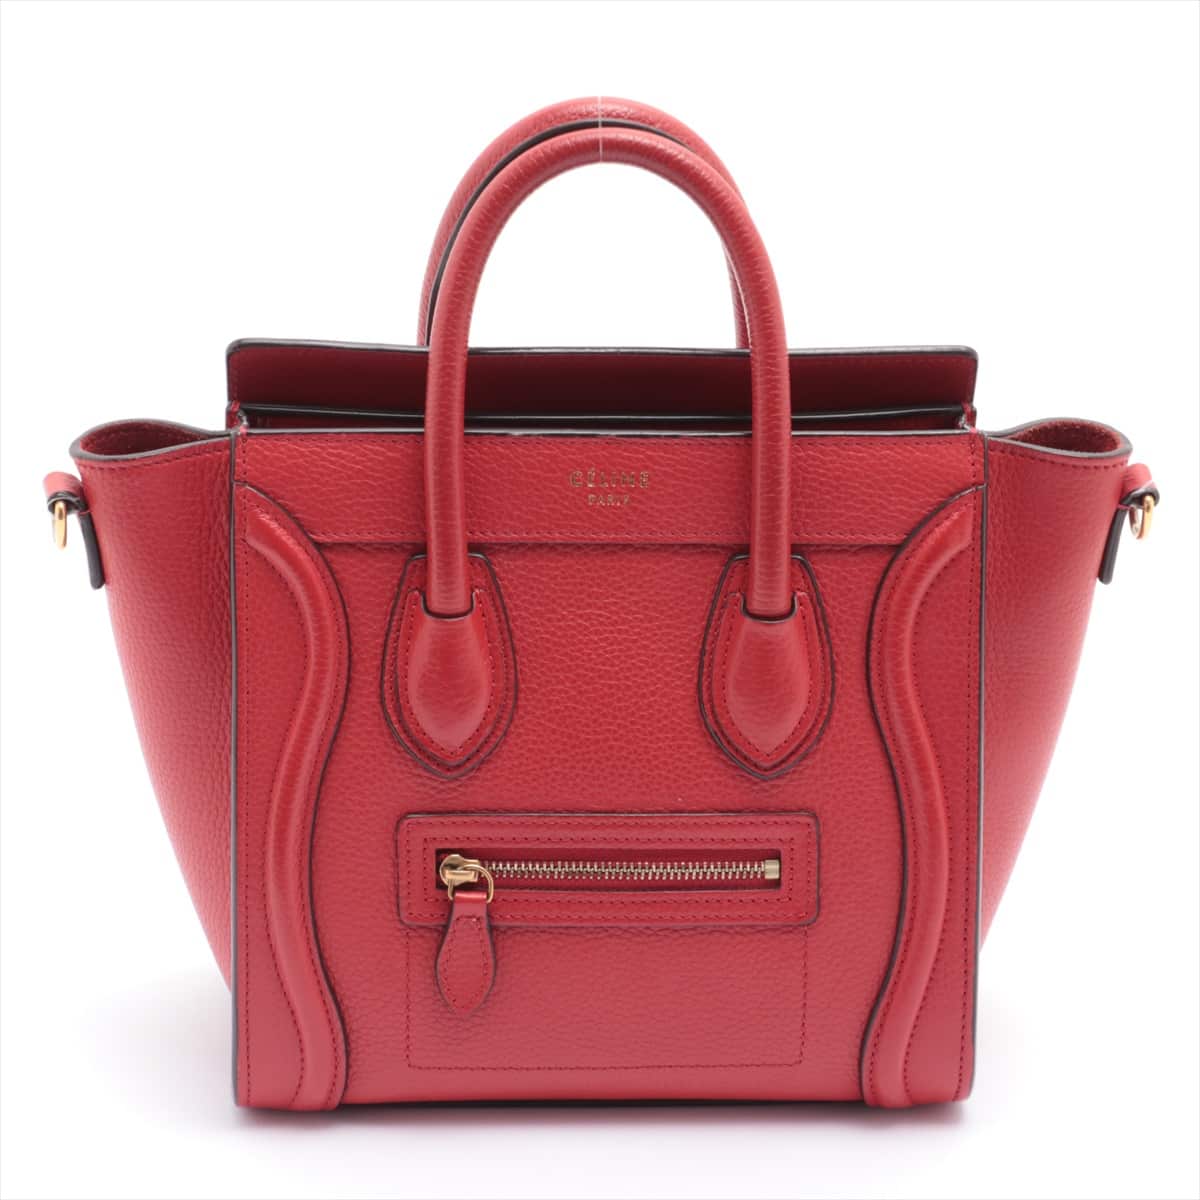 CELINE Luggage Nano shopper Leather 2way handbag Red